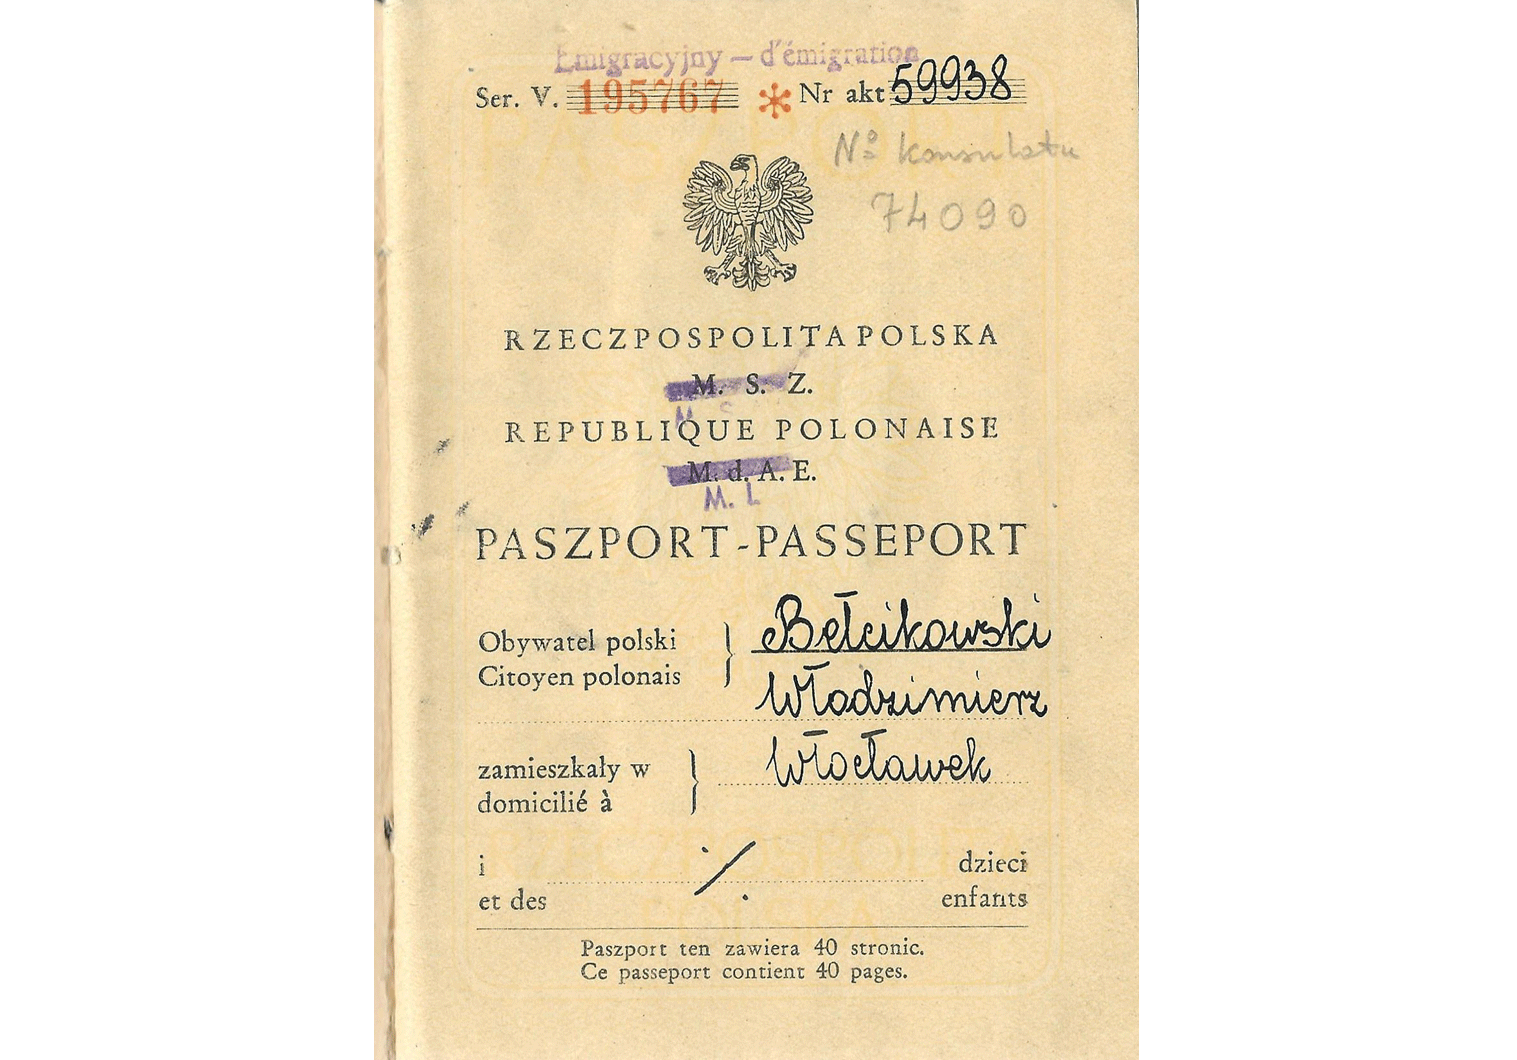 Late Polish Republic passport